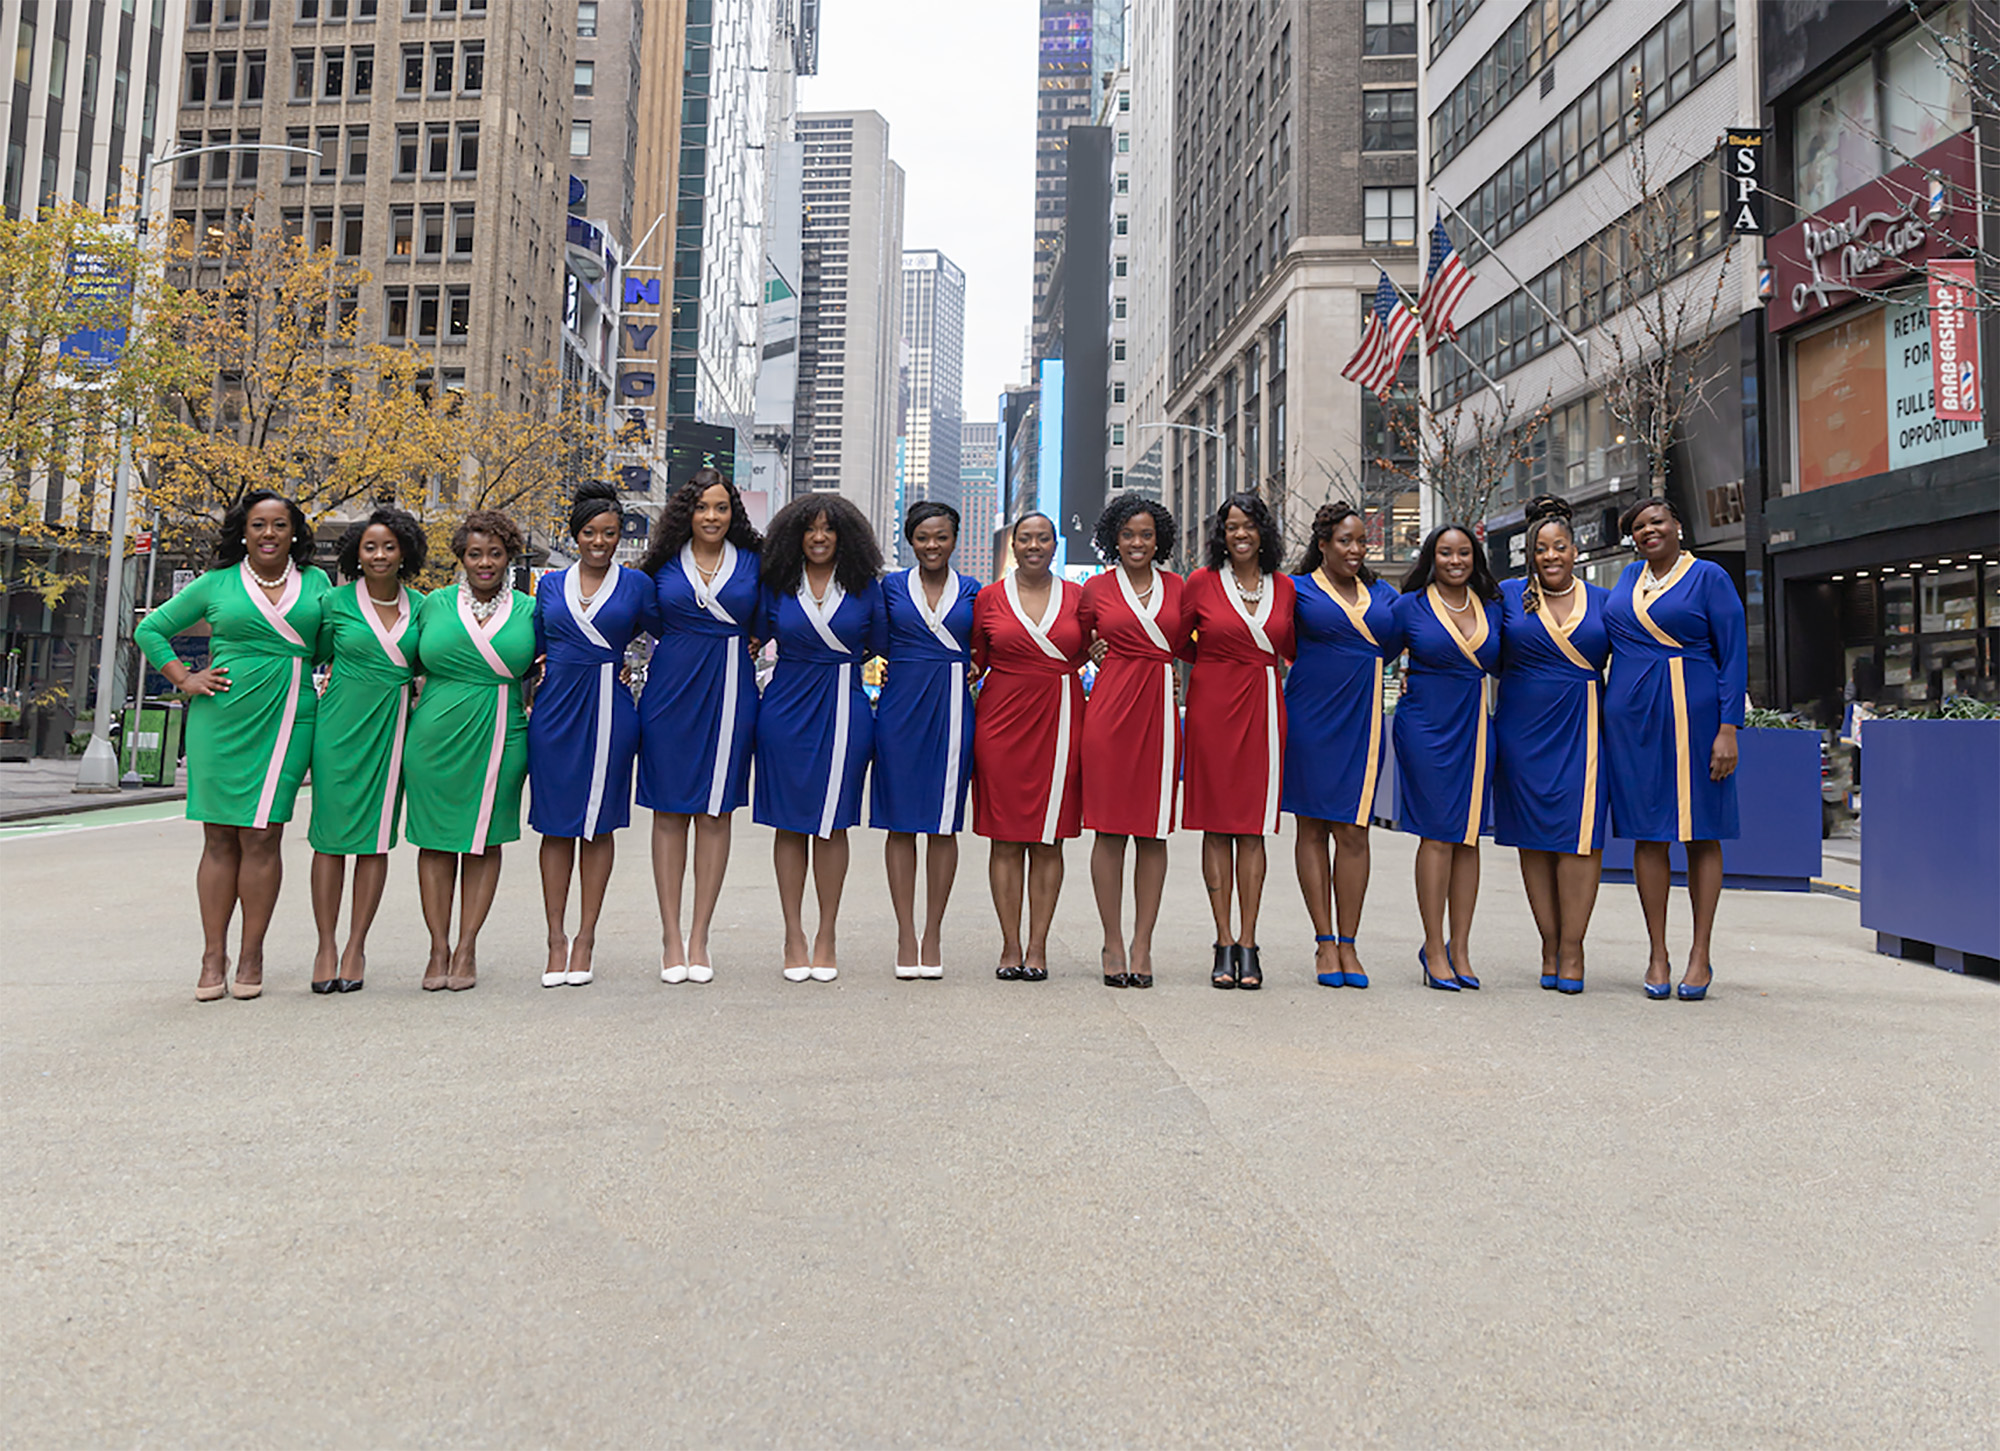 Divine Nine Black Sororities: Macy's Sells Dresses to Alpha Kappa Alpha,  Others - Bloomberg